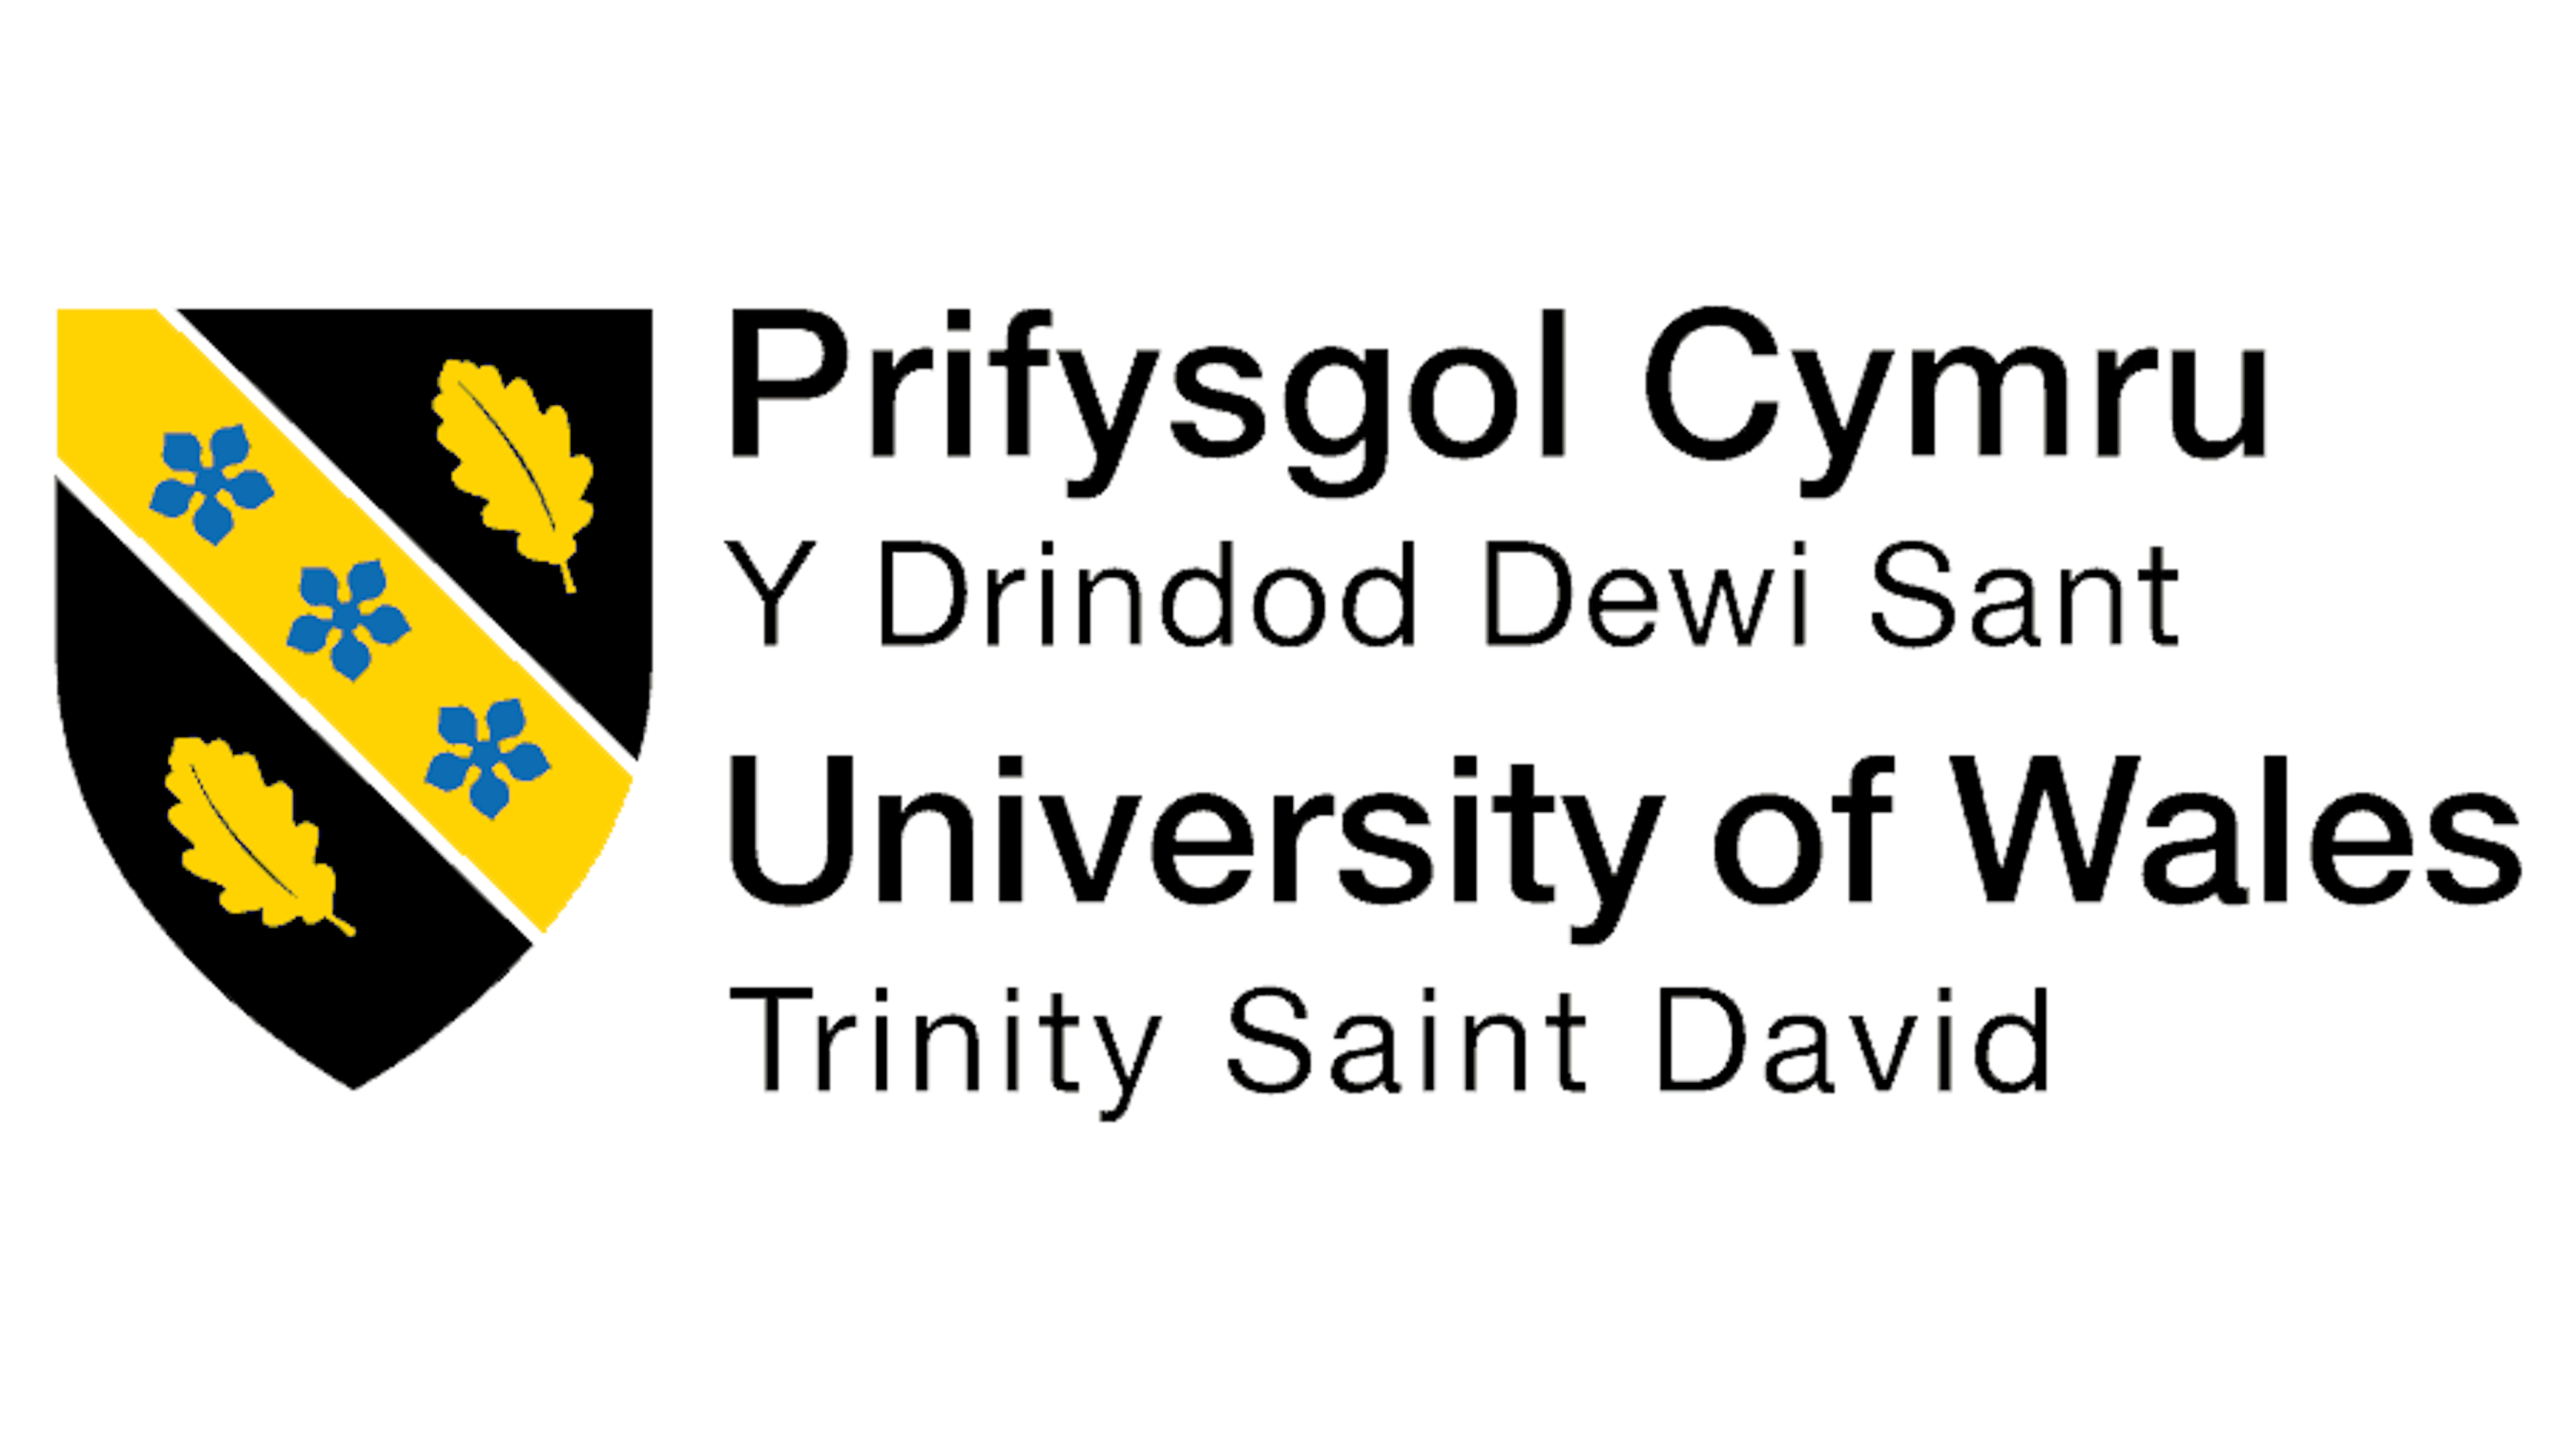 University of Wales Trinity St David